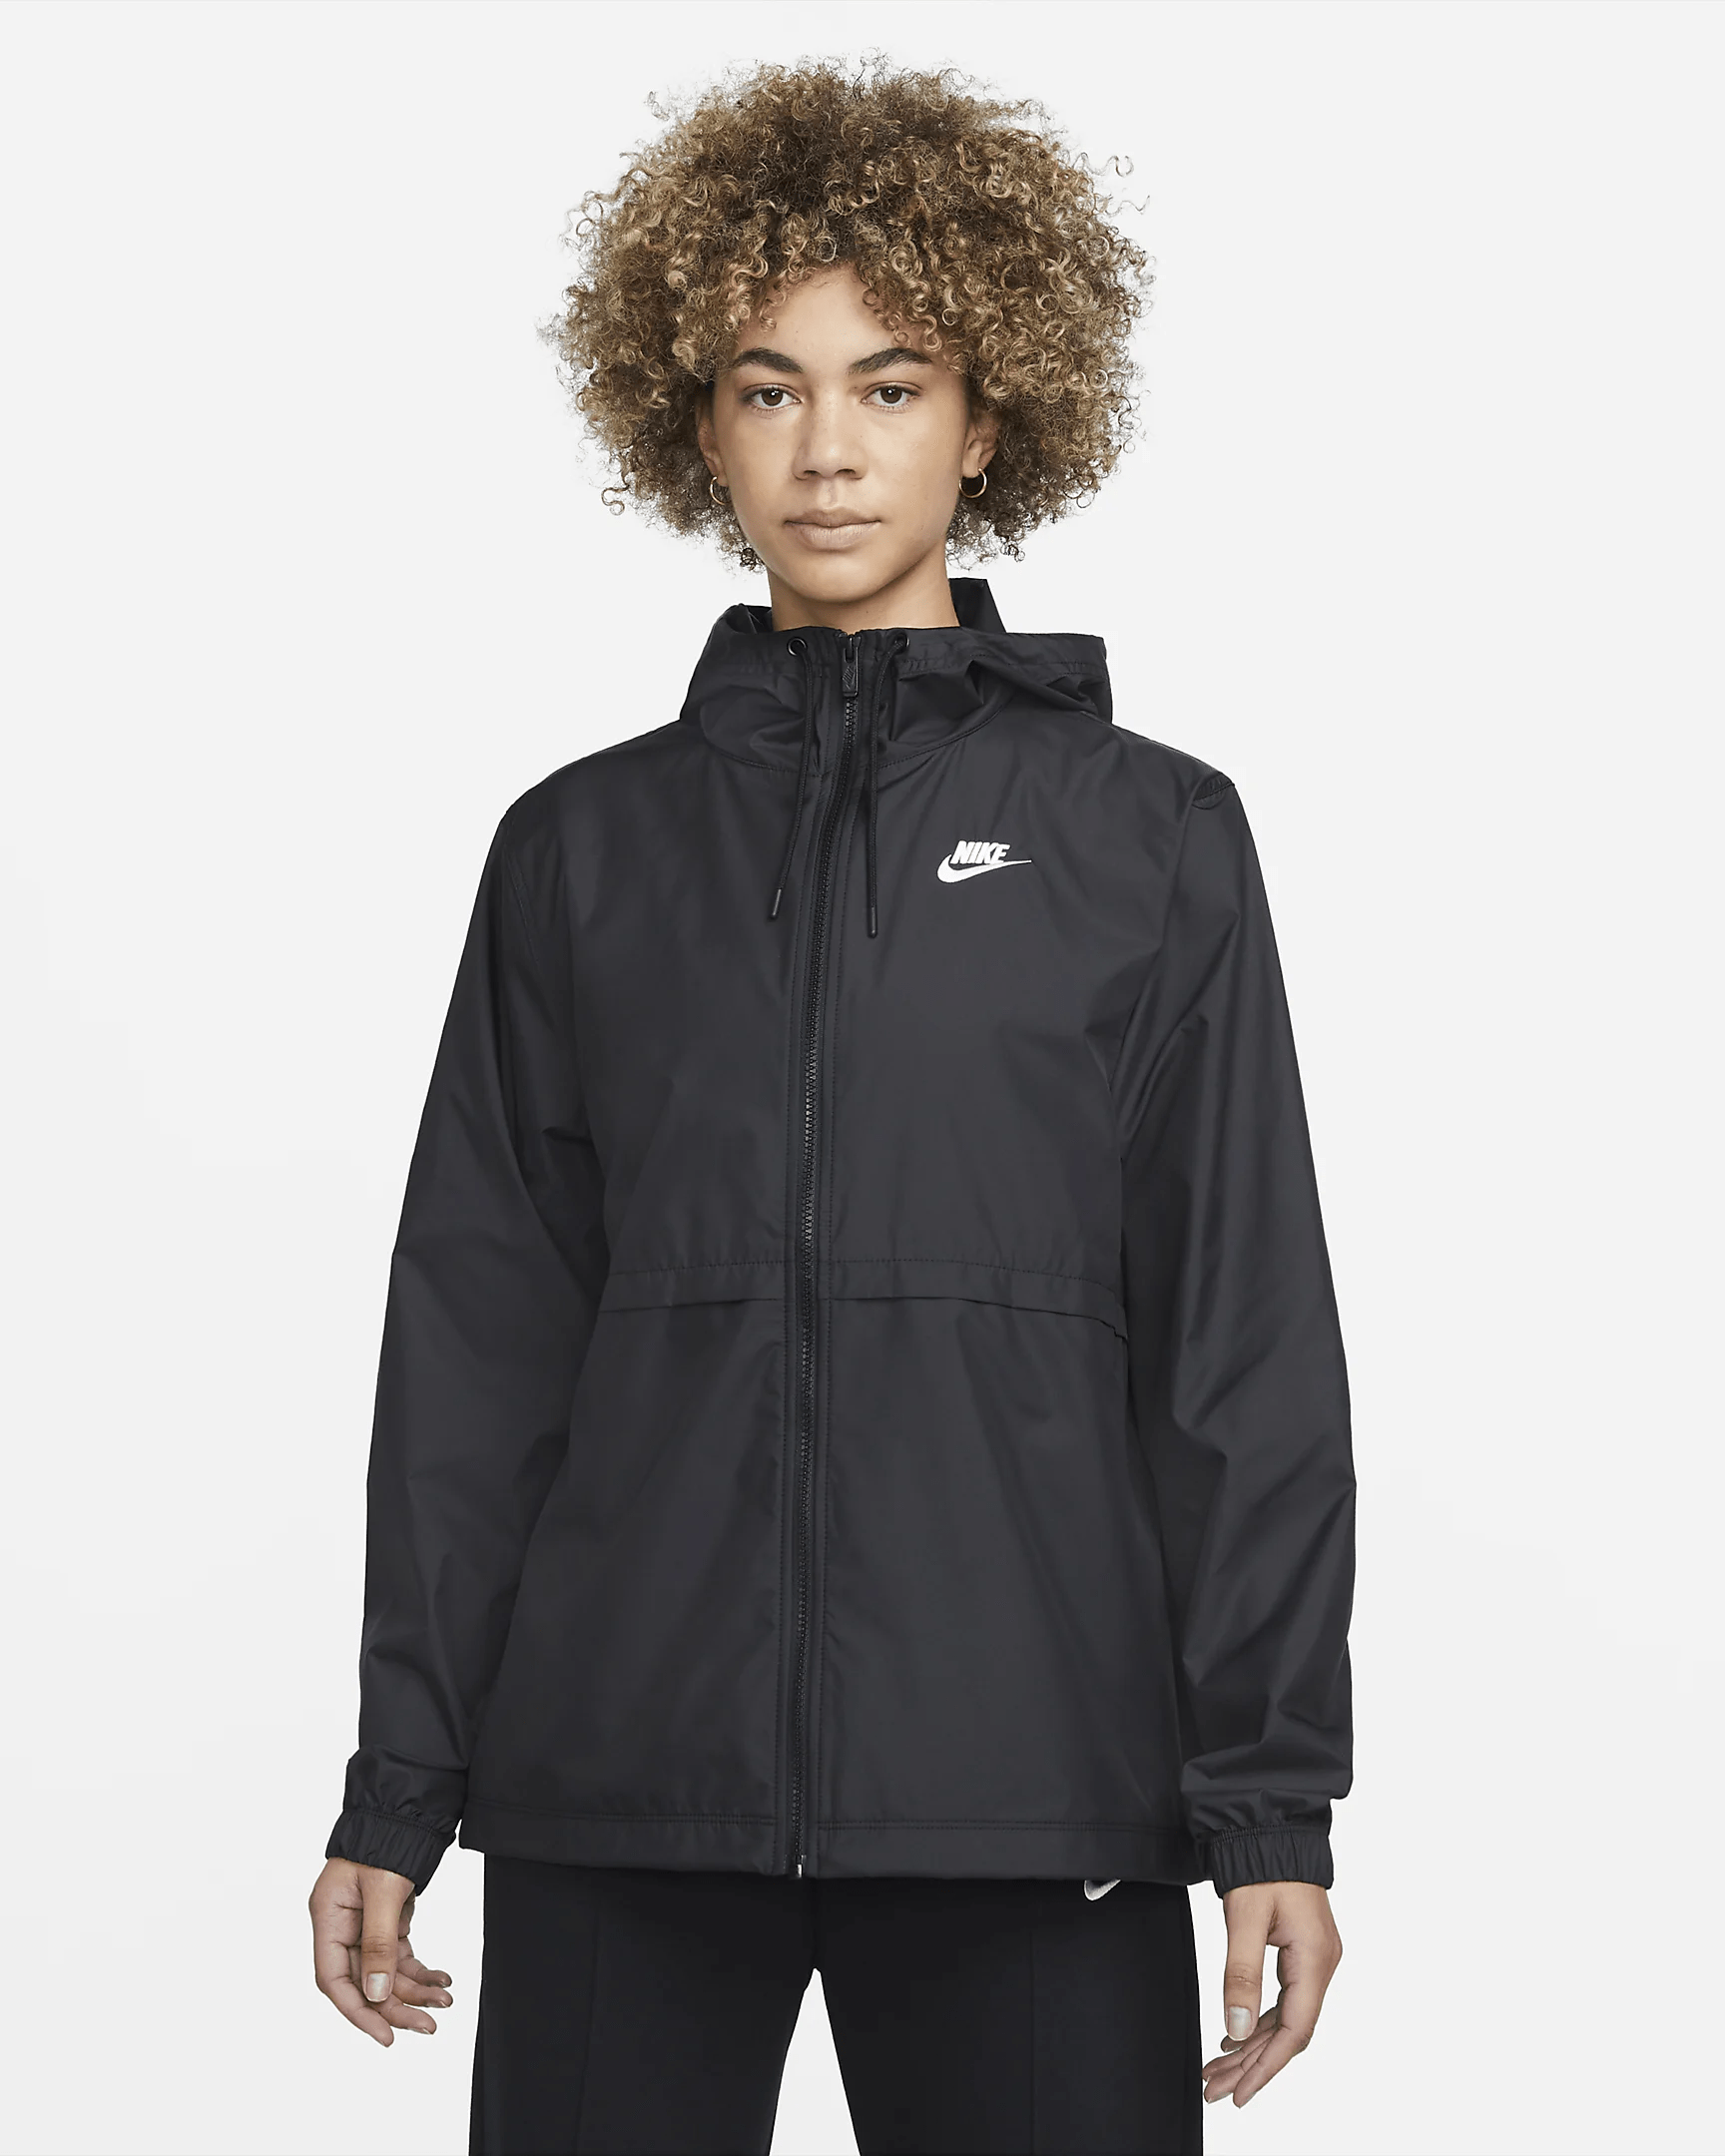 Nike - Essential Woven Jacket - Black/White - Nohble